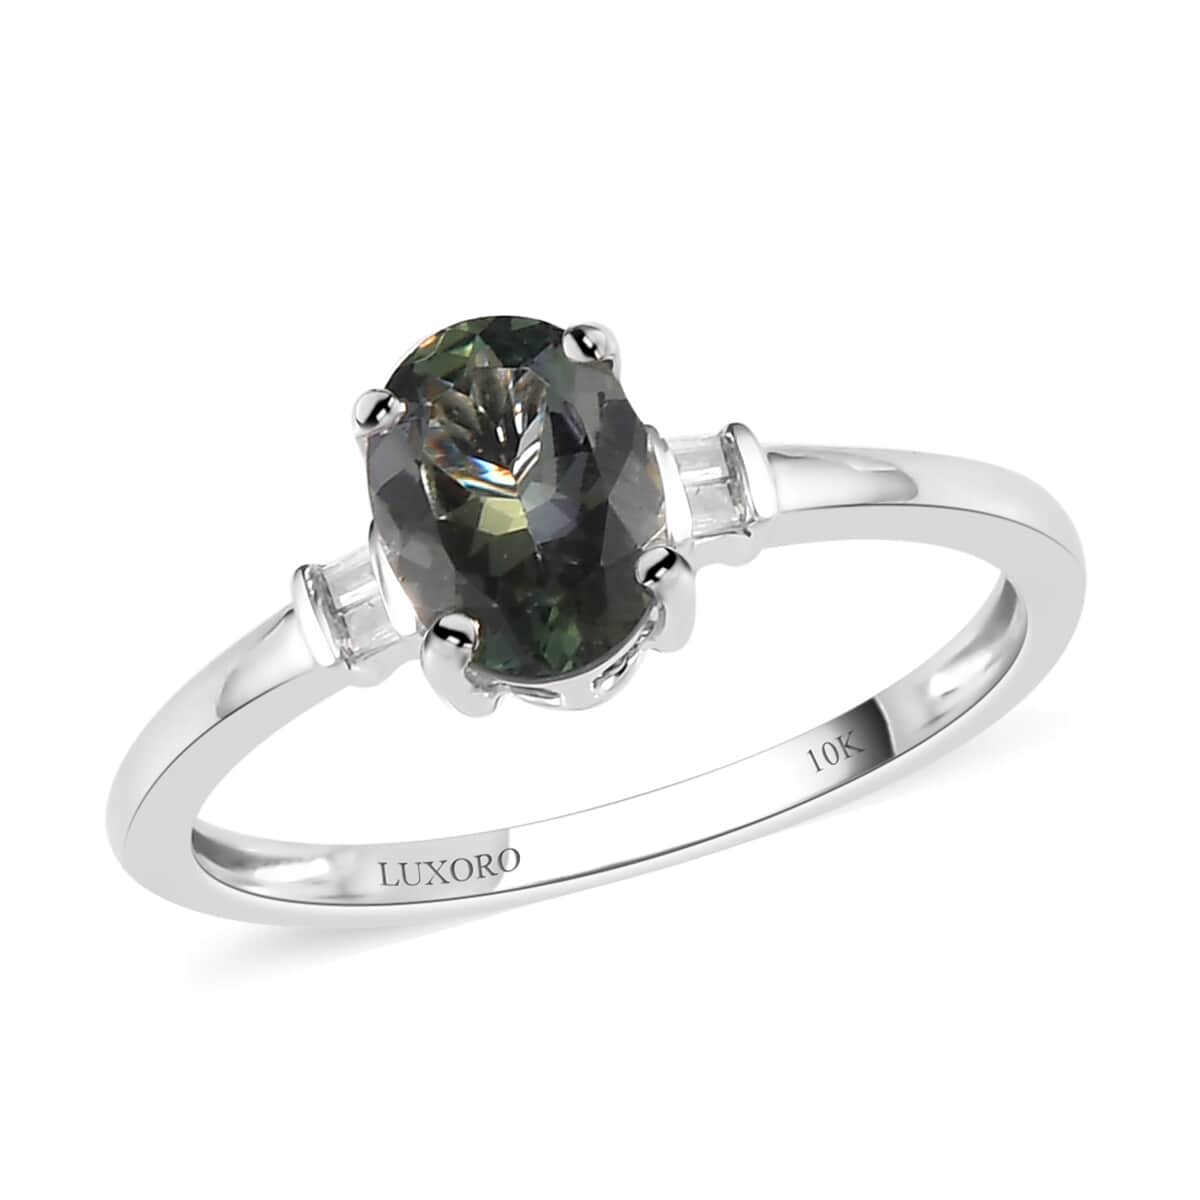 LUXORO 10K White Gold Premium Green Tanzanite and G-H I3 Diamond Ring (Size 7.0) 1.15 ctw image number 0